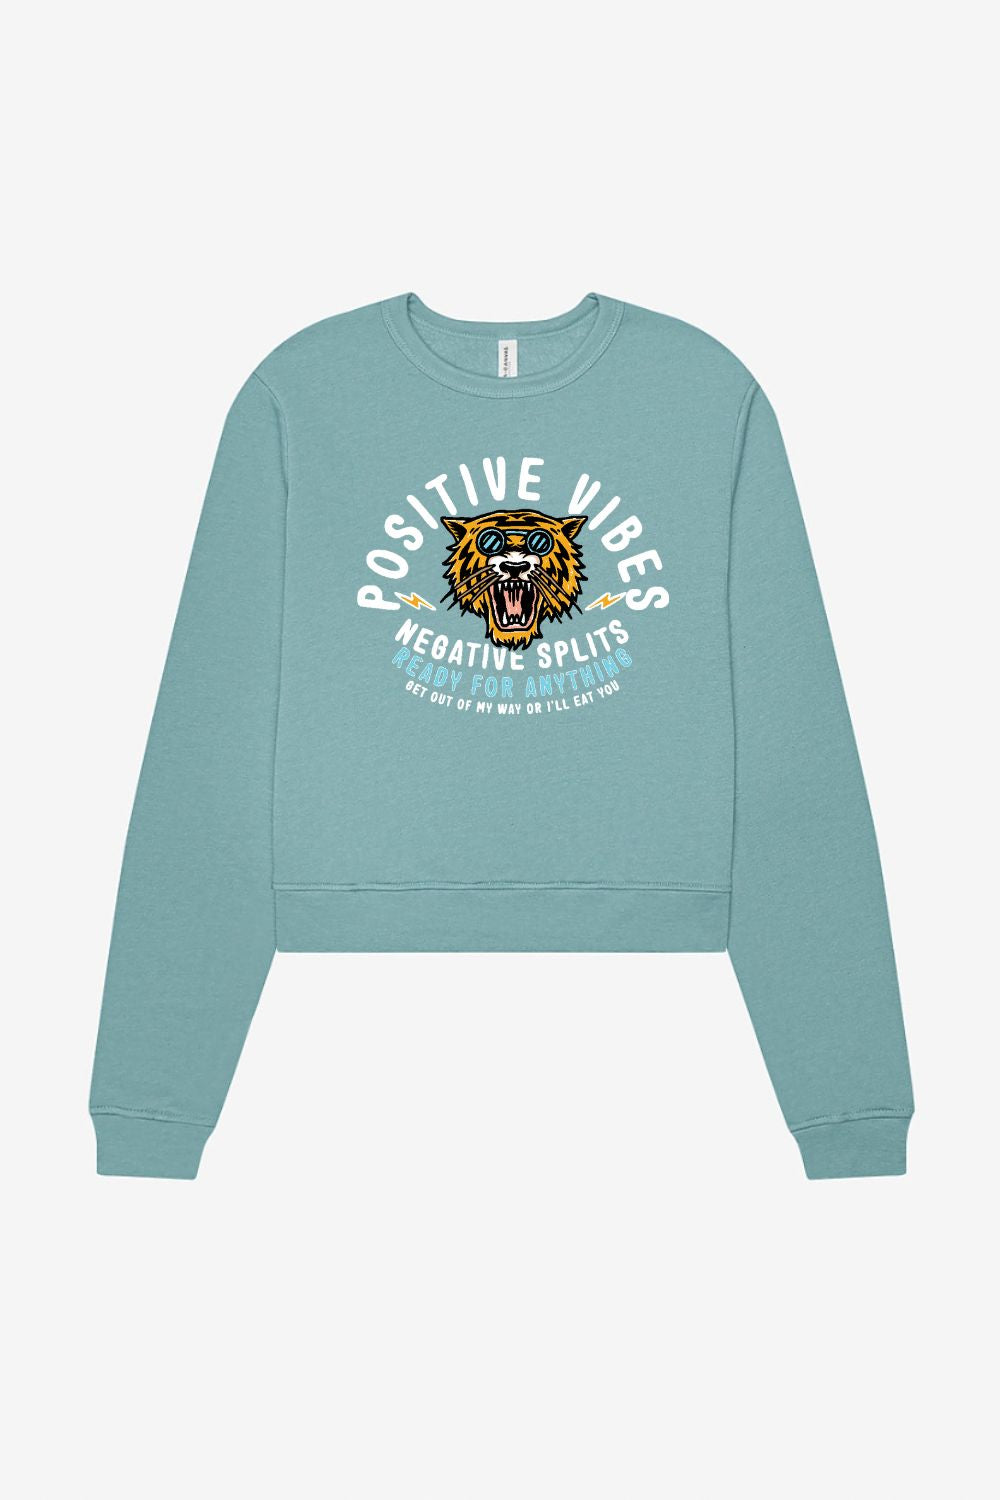 Positive Vibes, Negative Splits Women's Sweatshirt